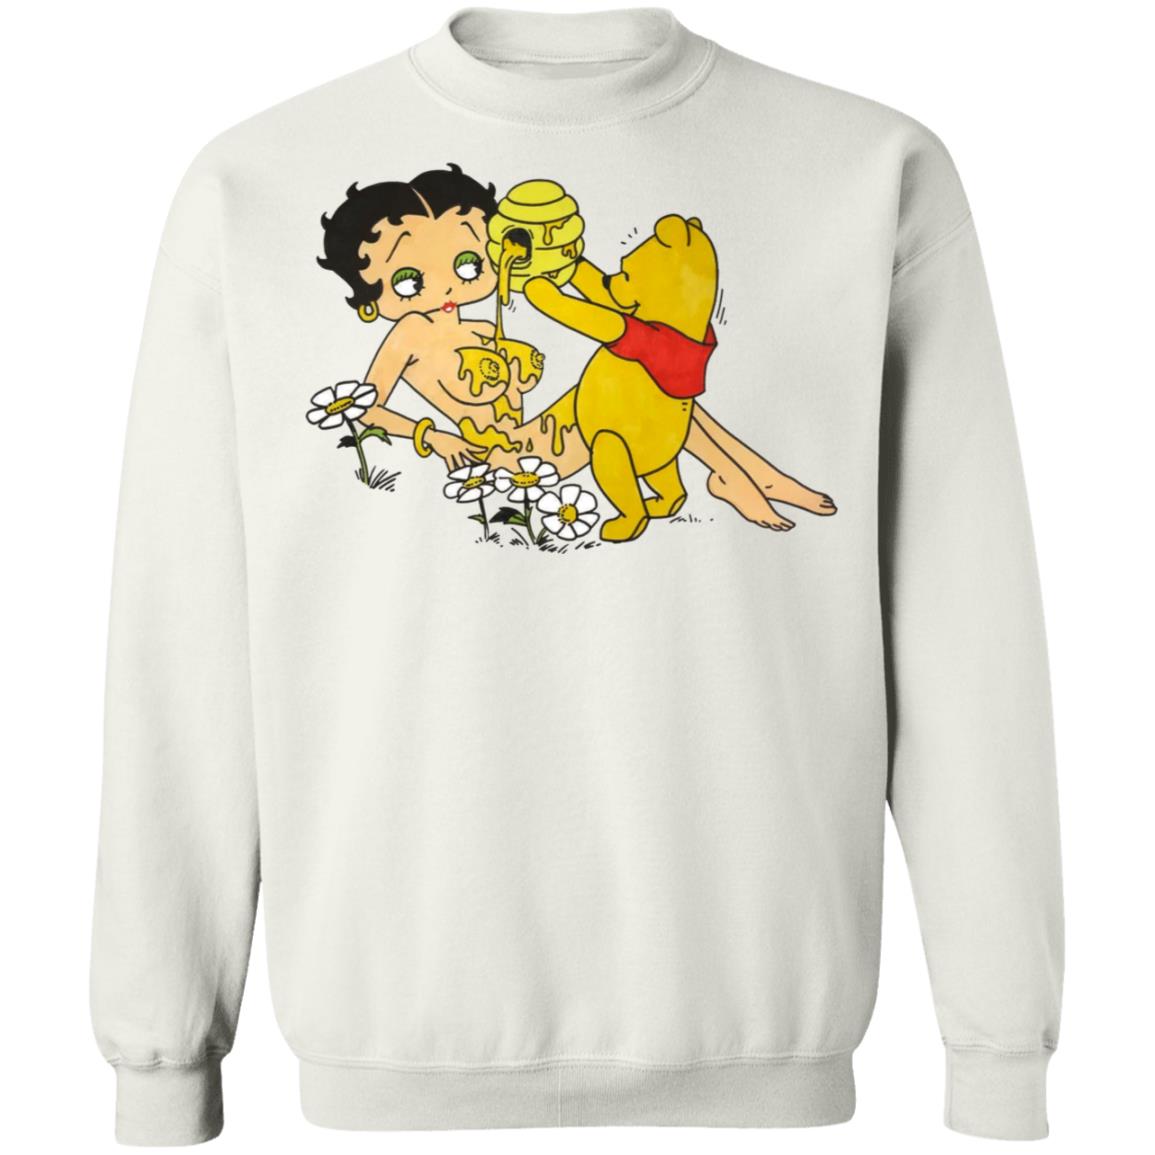 Honey Betty Boop And Pooh Bear Shirt 1